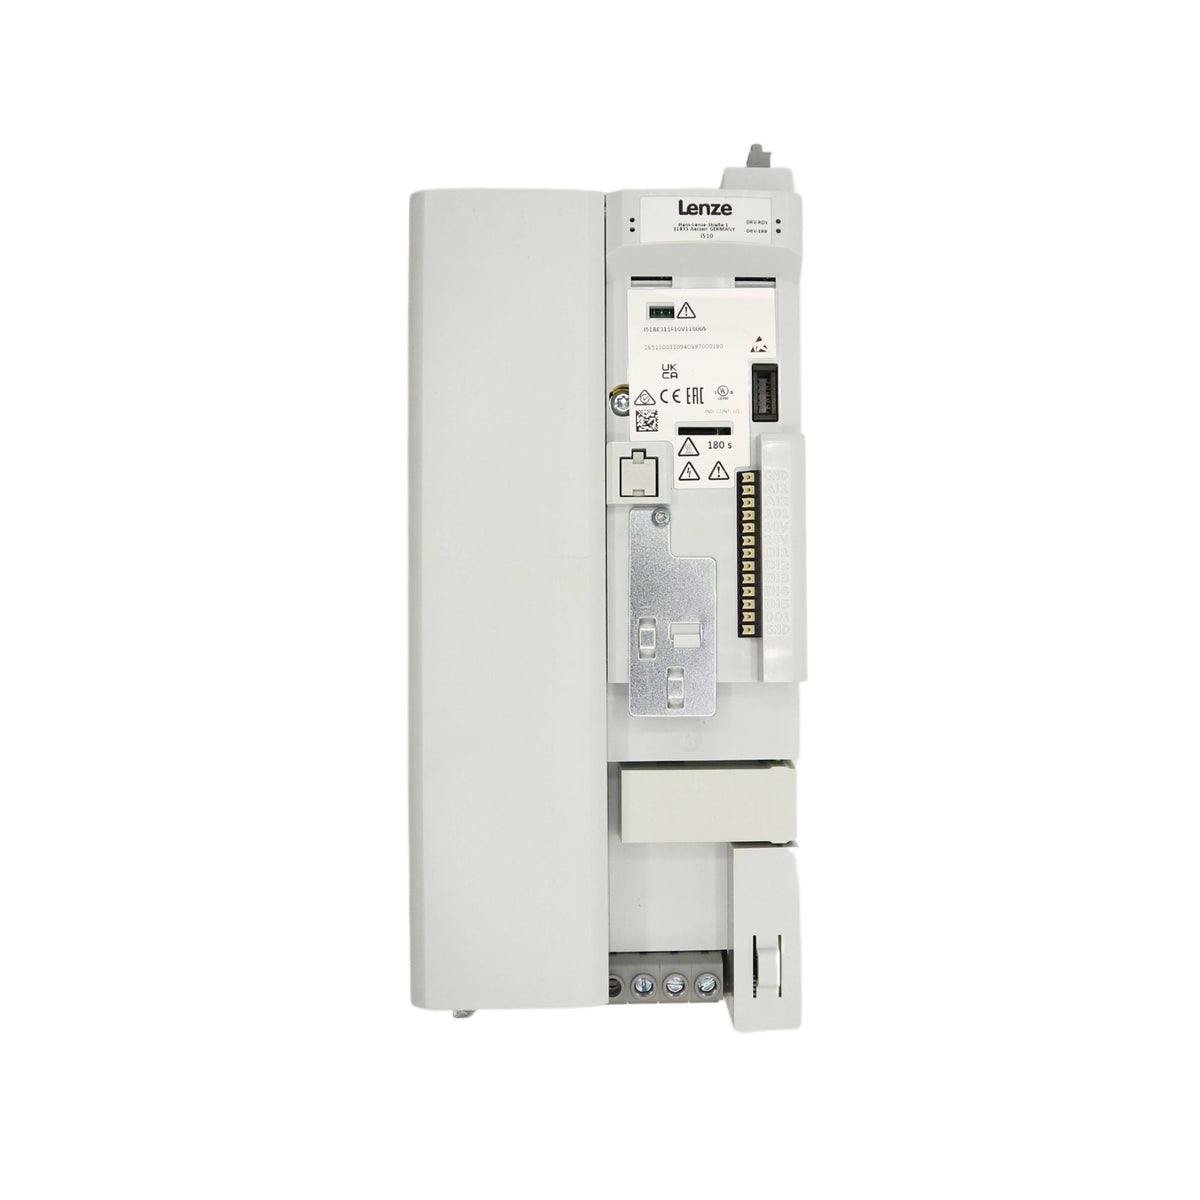 Lenze | i510 15hp Cabinet mount 480volt 5digital inputs, 2 analog inputs, 1 digital output 1 analog Output, 1 relay | I51BE311F10V11000S - front view